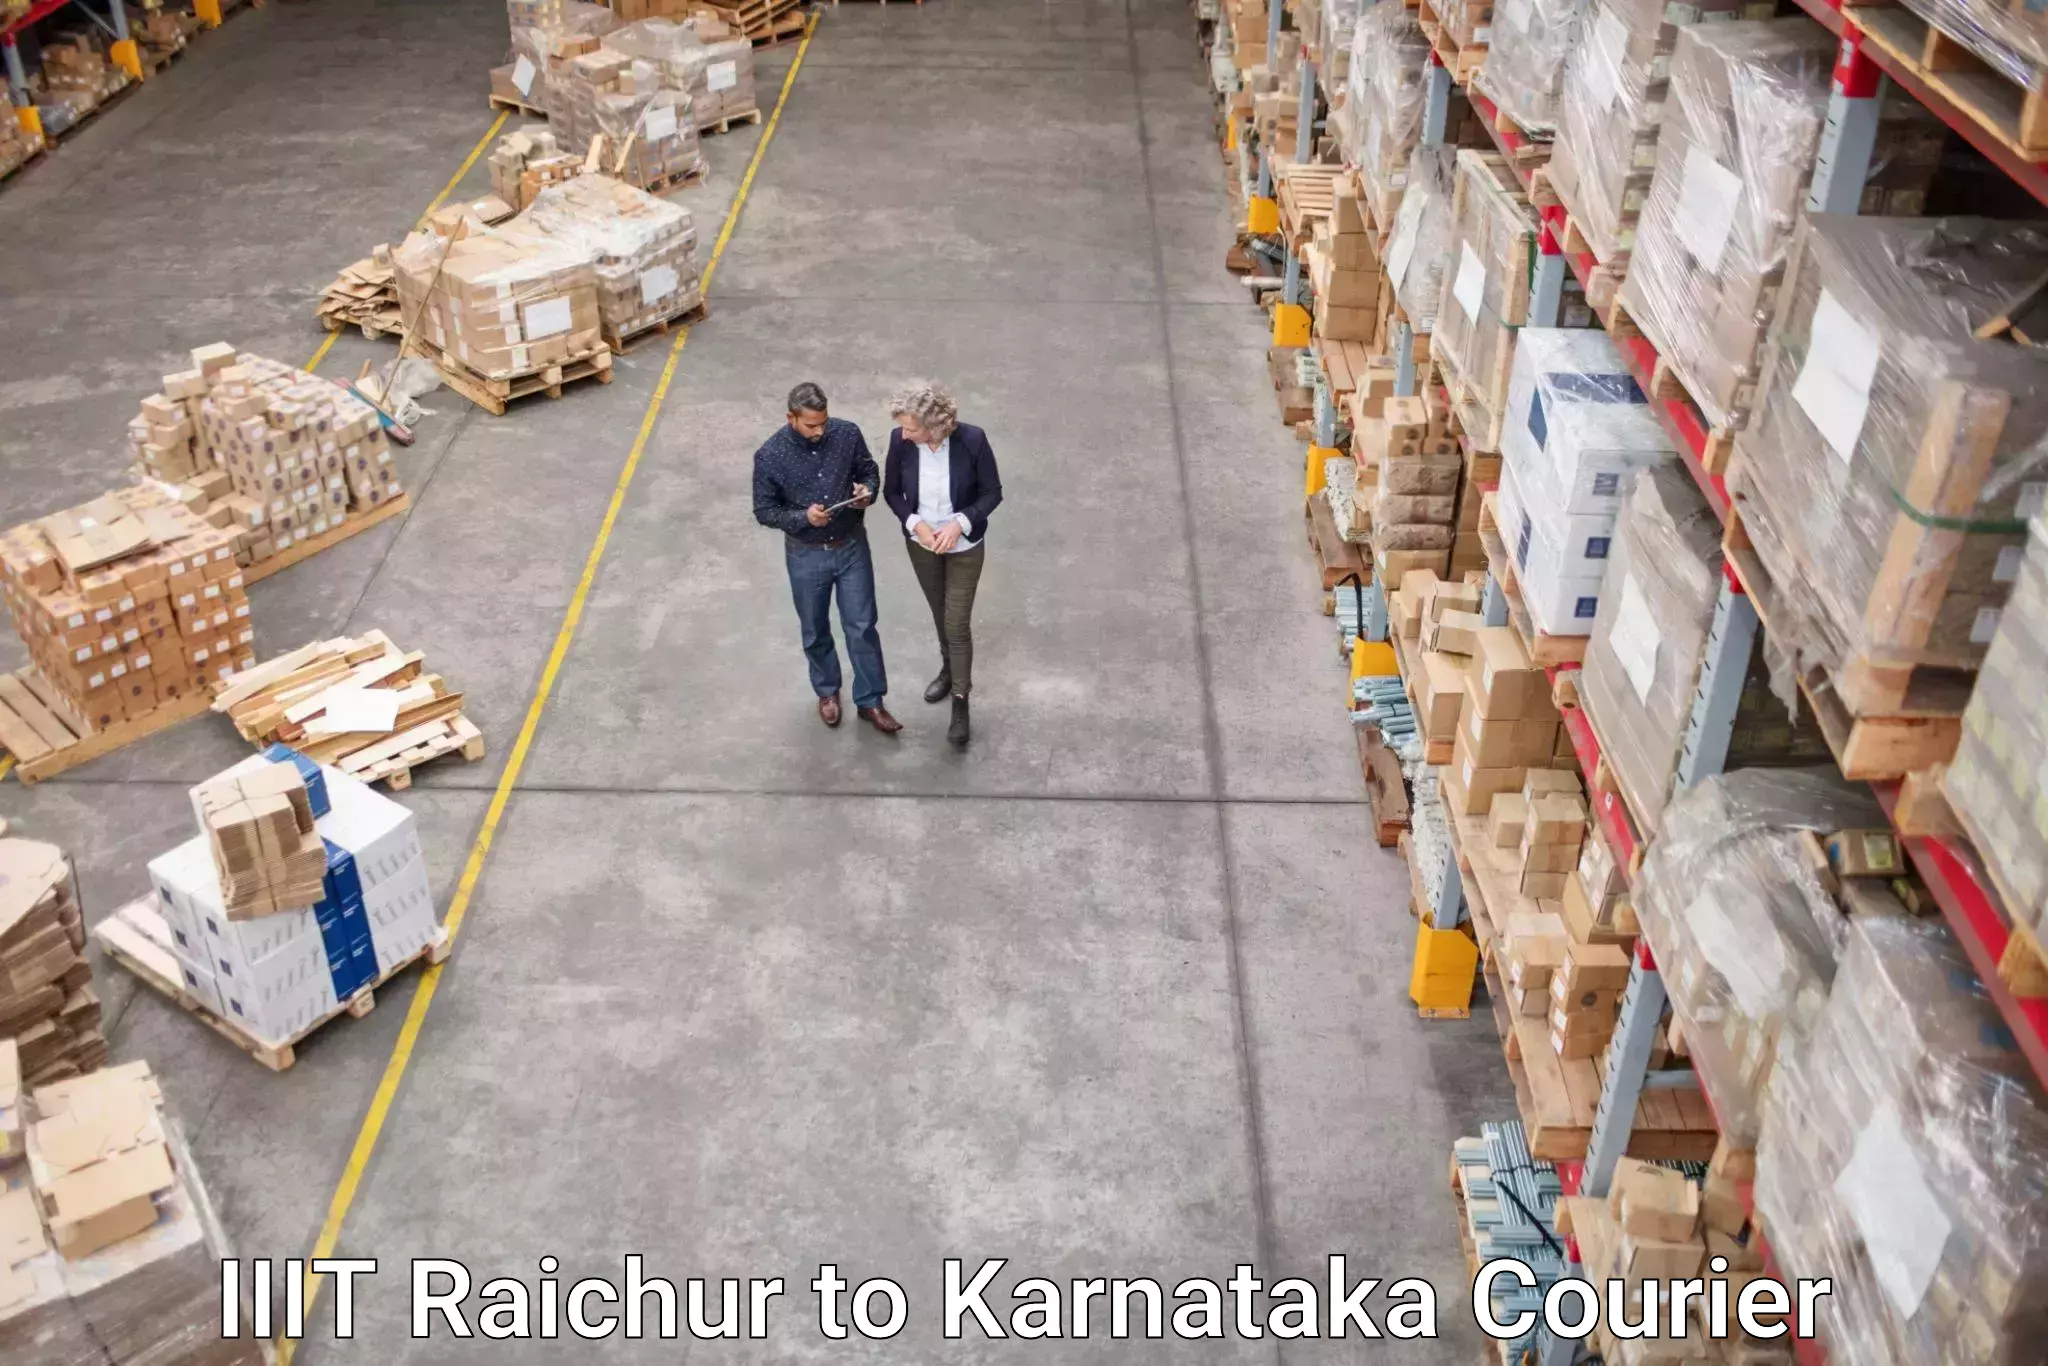 Reliable courier service IIIT Raichur to Nagamangala